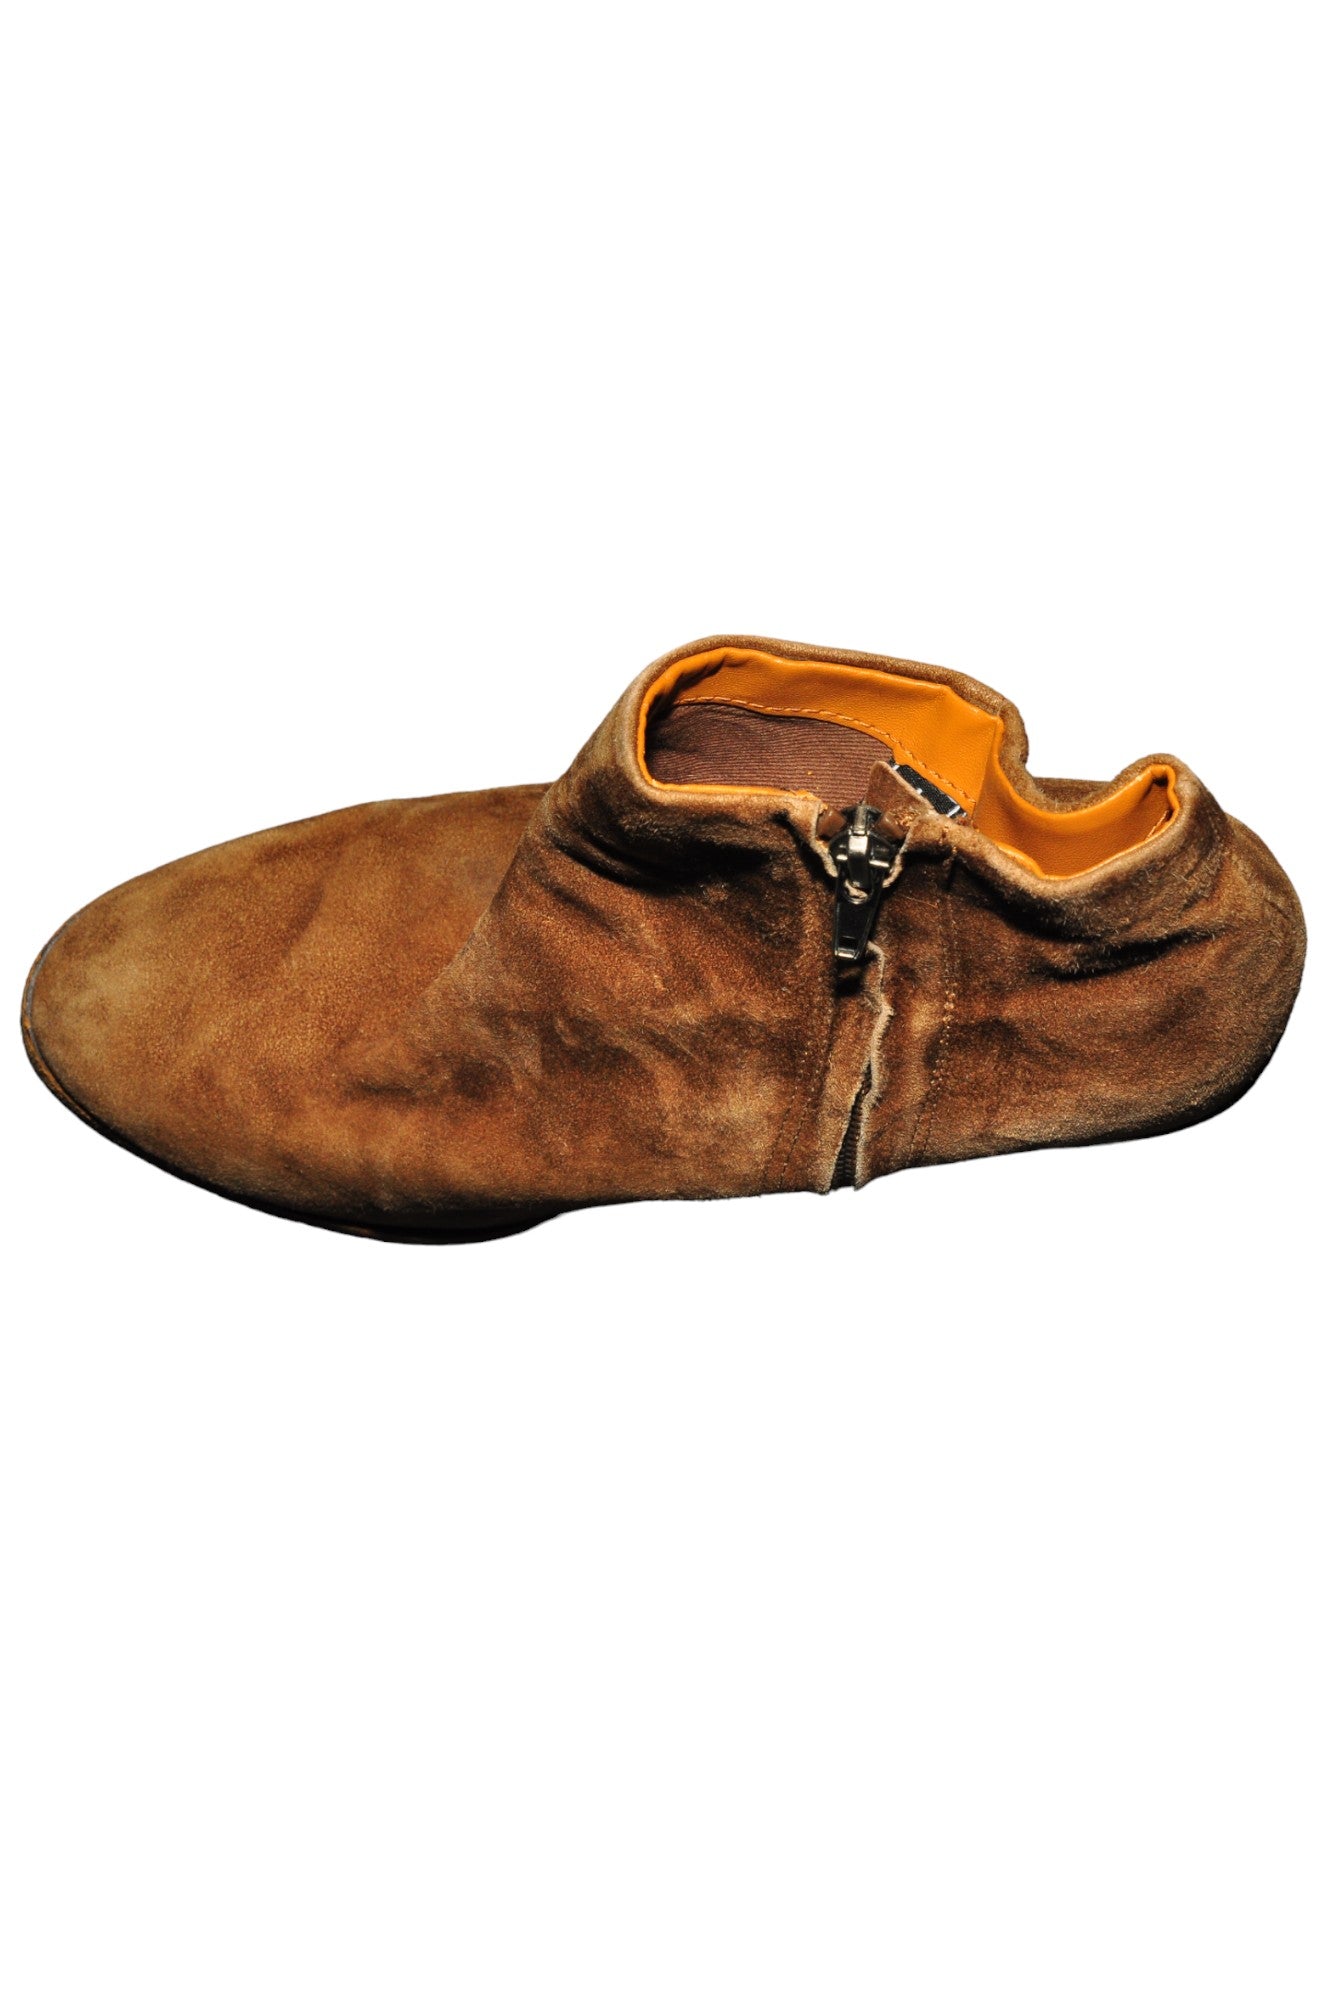 DOLCE VITA Women Boots Regular fit in Brown - Size 8 | 65.99 $ KOOP